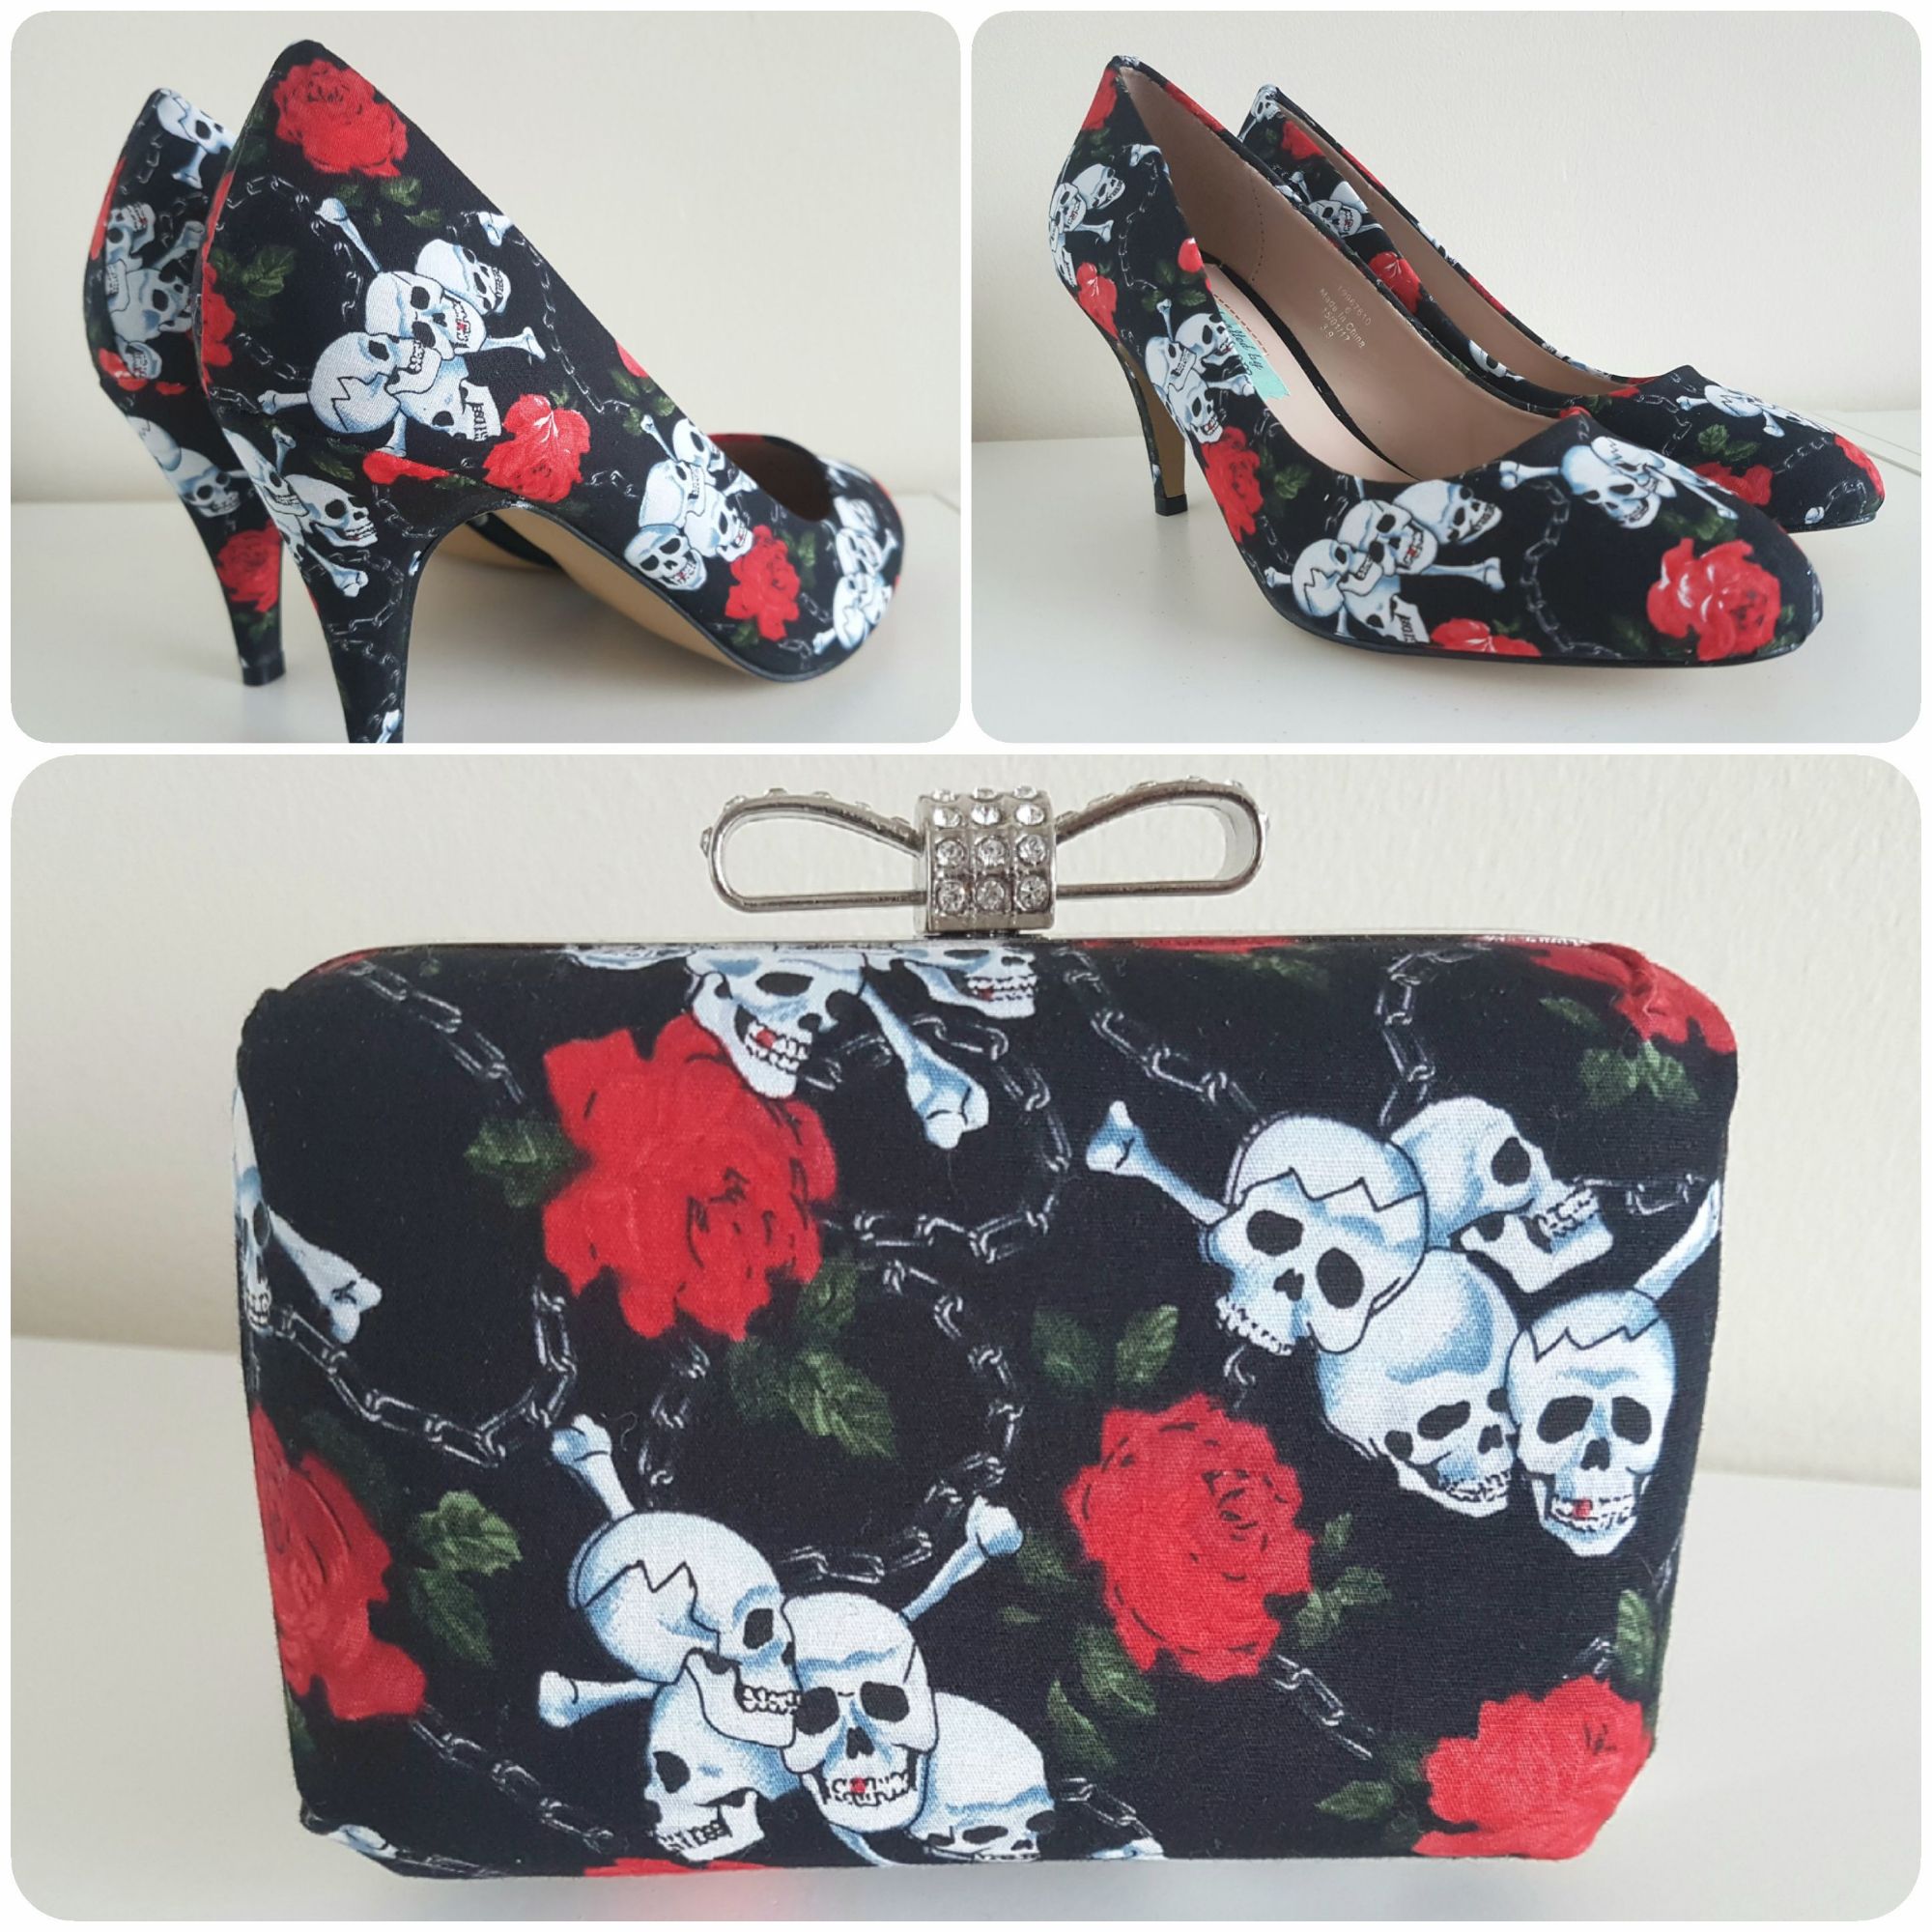 Gothic shoes, Skull & Roses shoes & bag, alternative wedding shoes